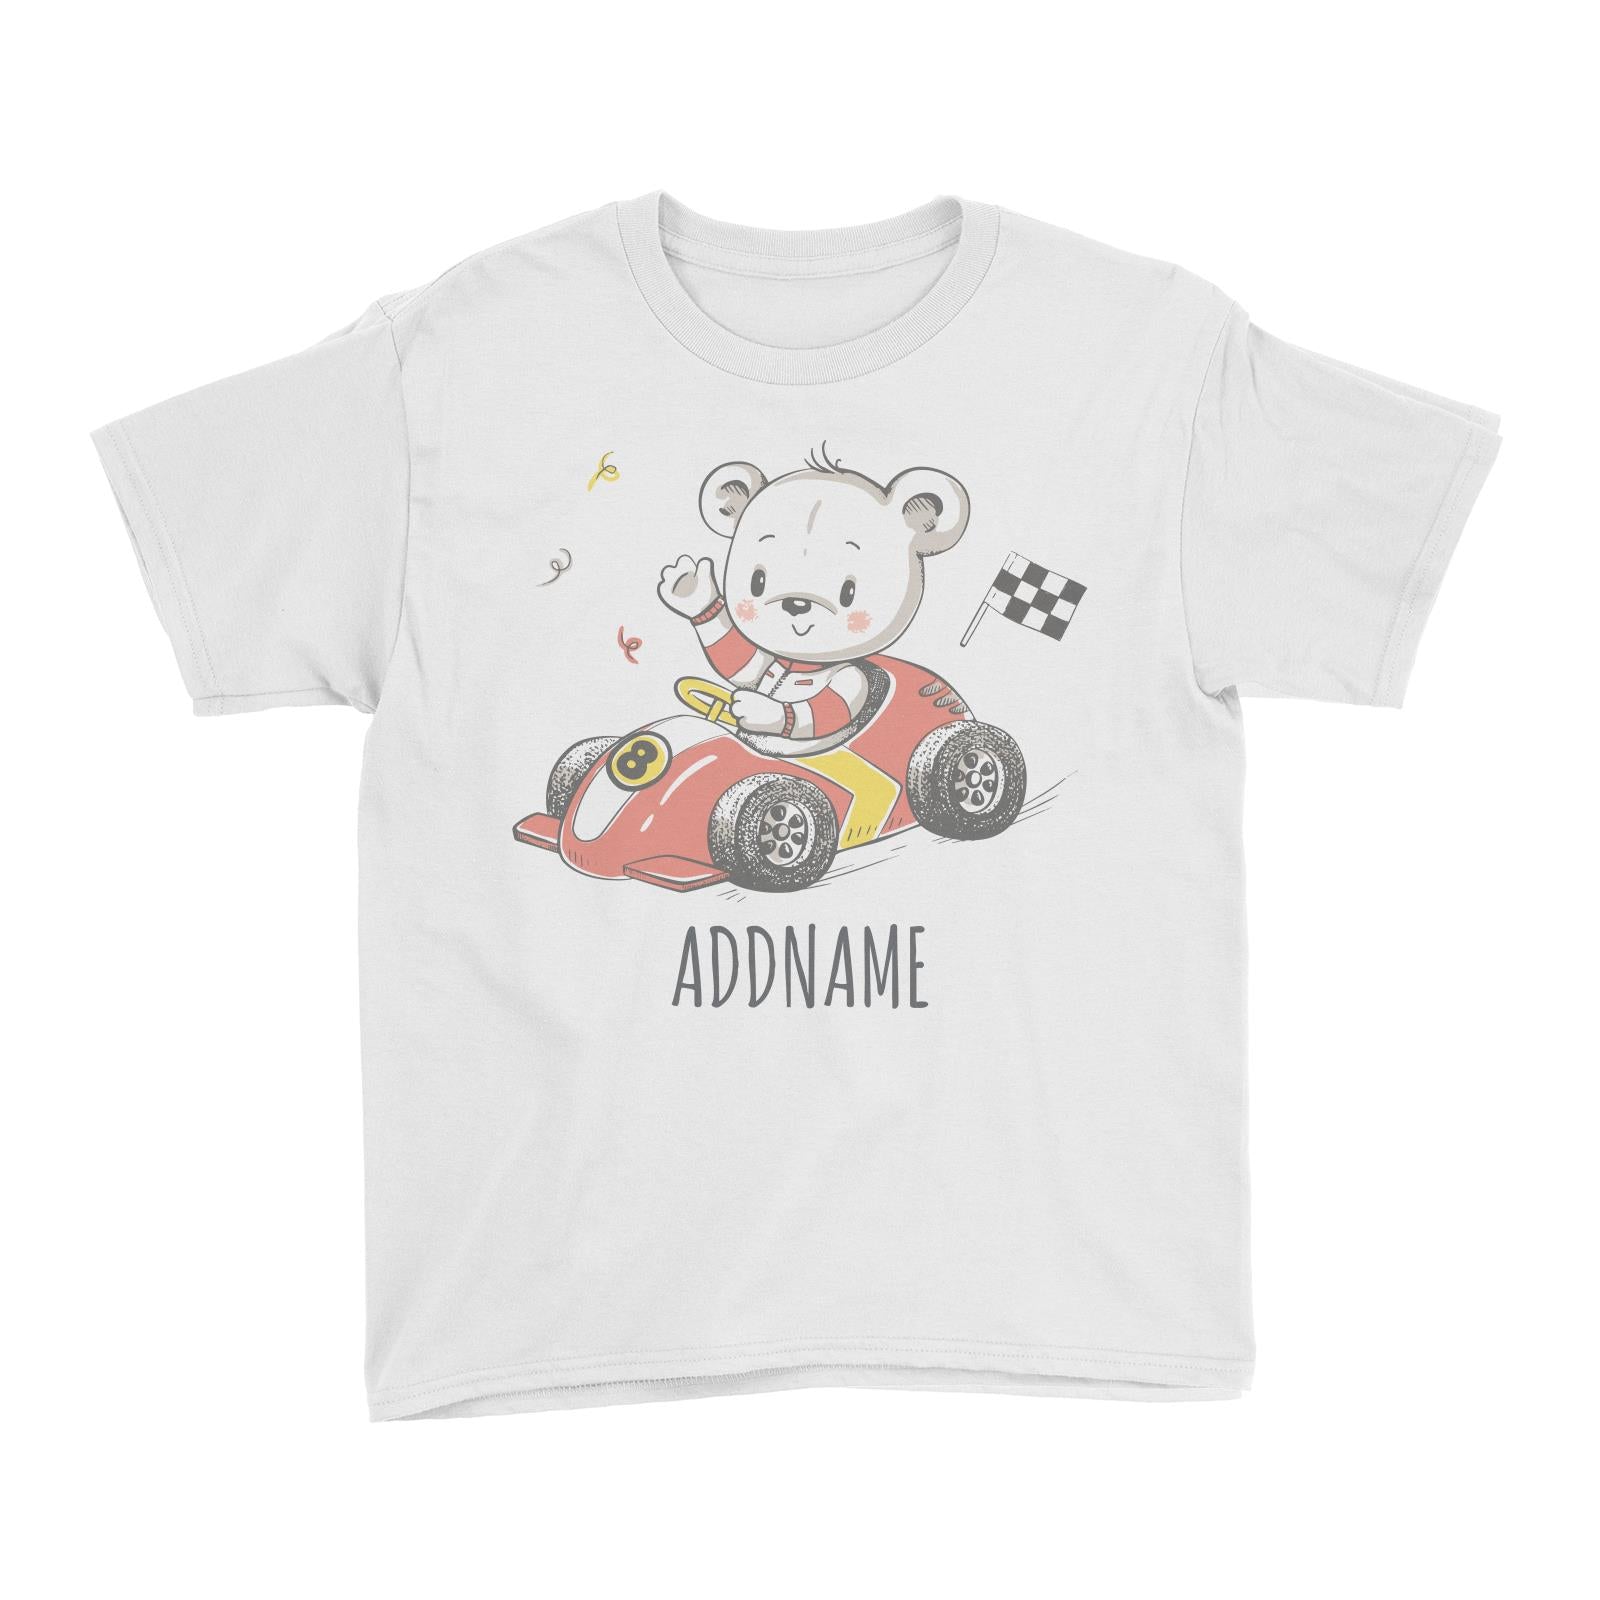 Bear on Go Kart White Kid's T-Shirt Personalizable Designs Cute Sweet Animal For Boys HG